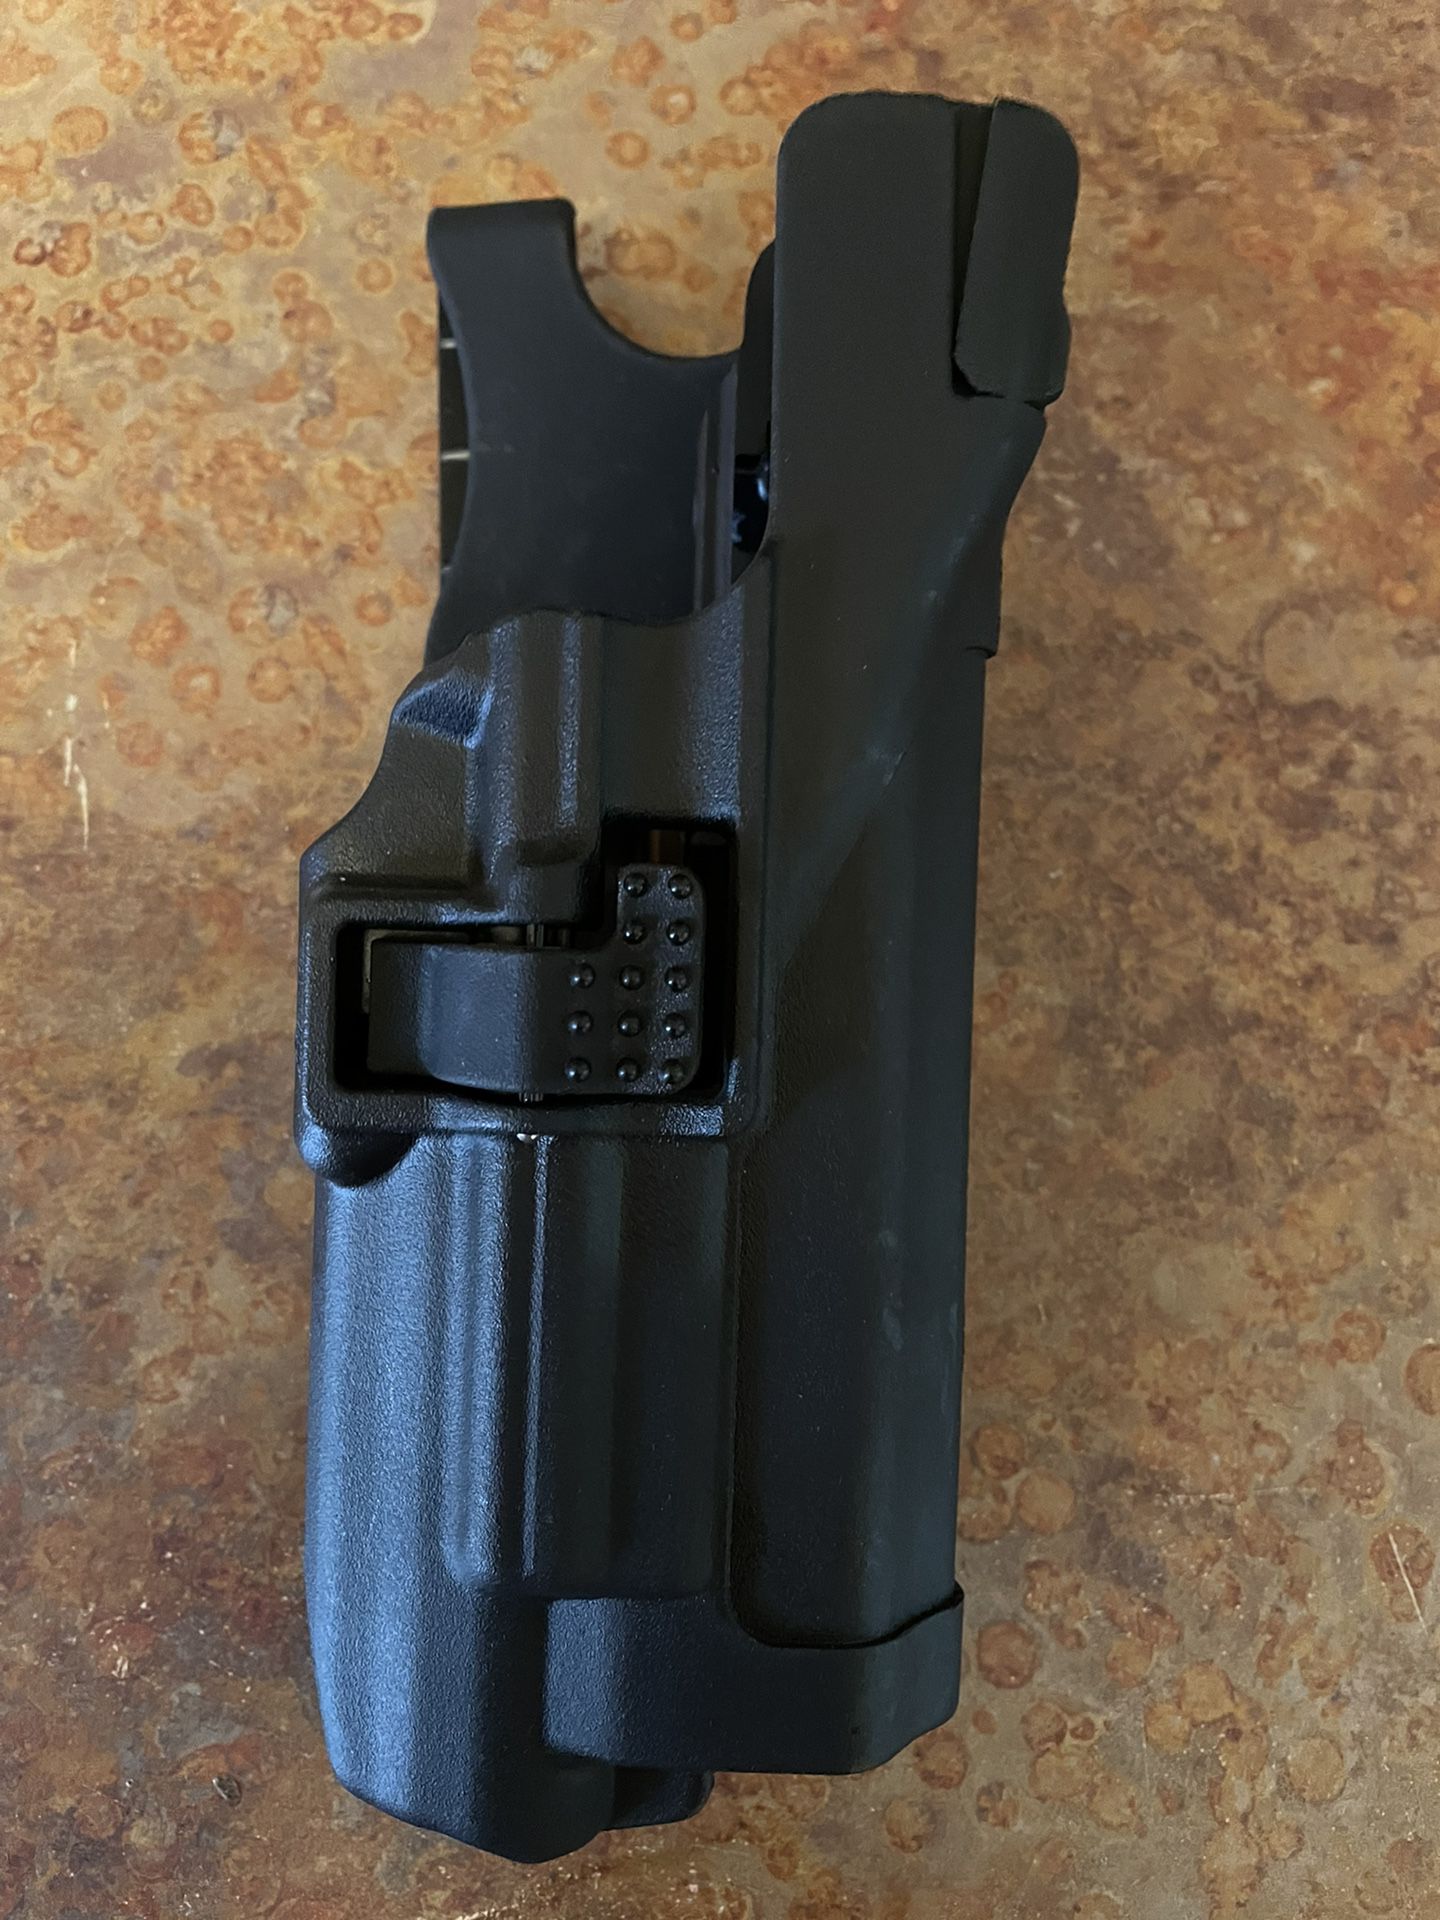 Blackhawk Glock 19 holster with TLR1 Light